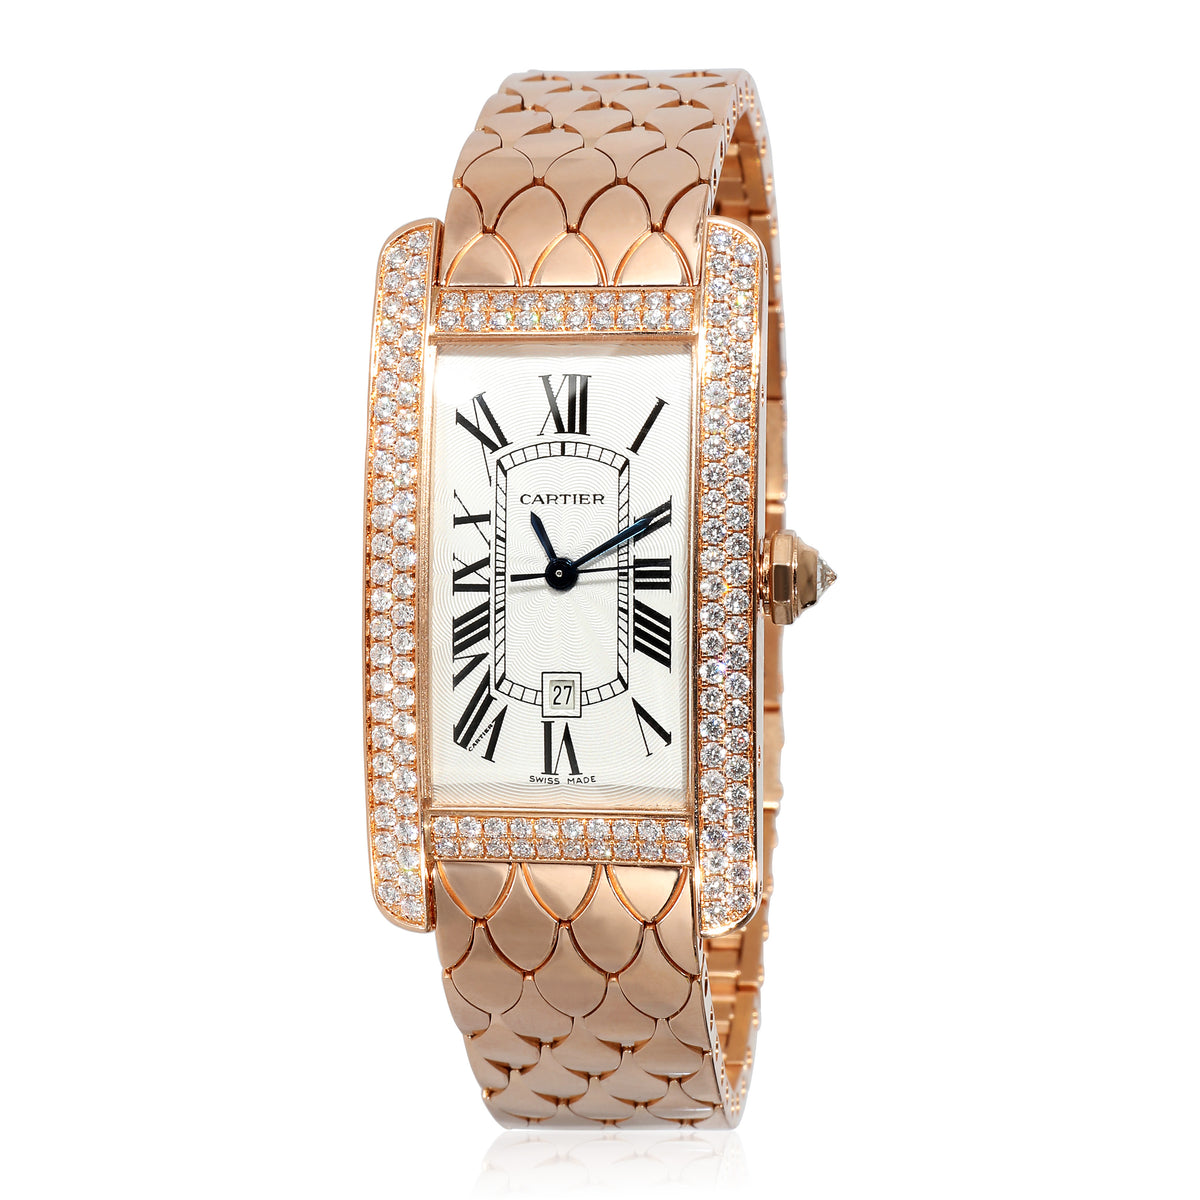 Cartier Tank Americaine WB710010 Women's Watch in 18k Rose Gold